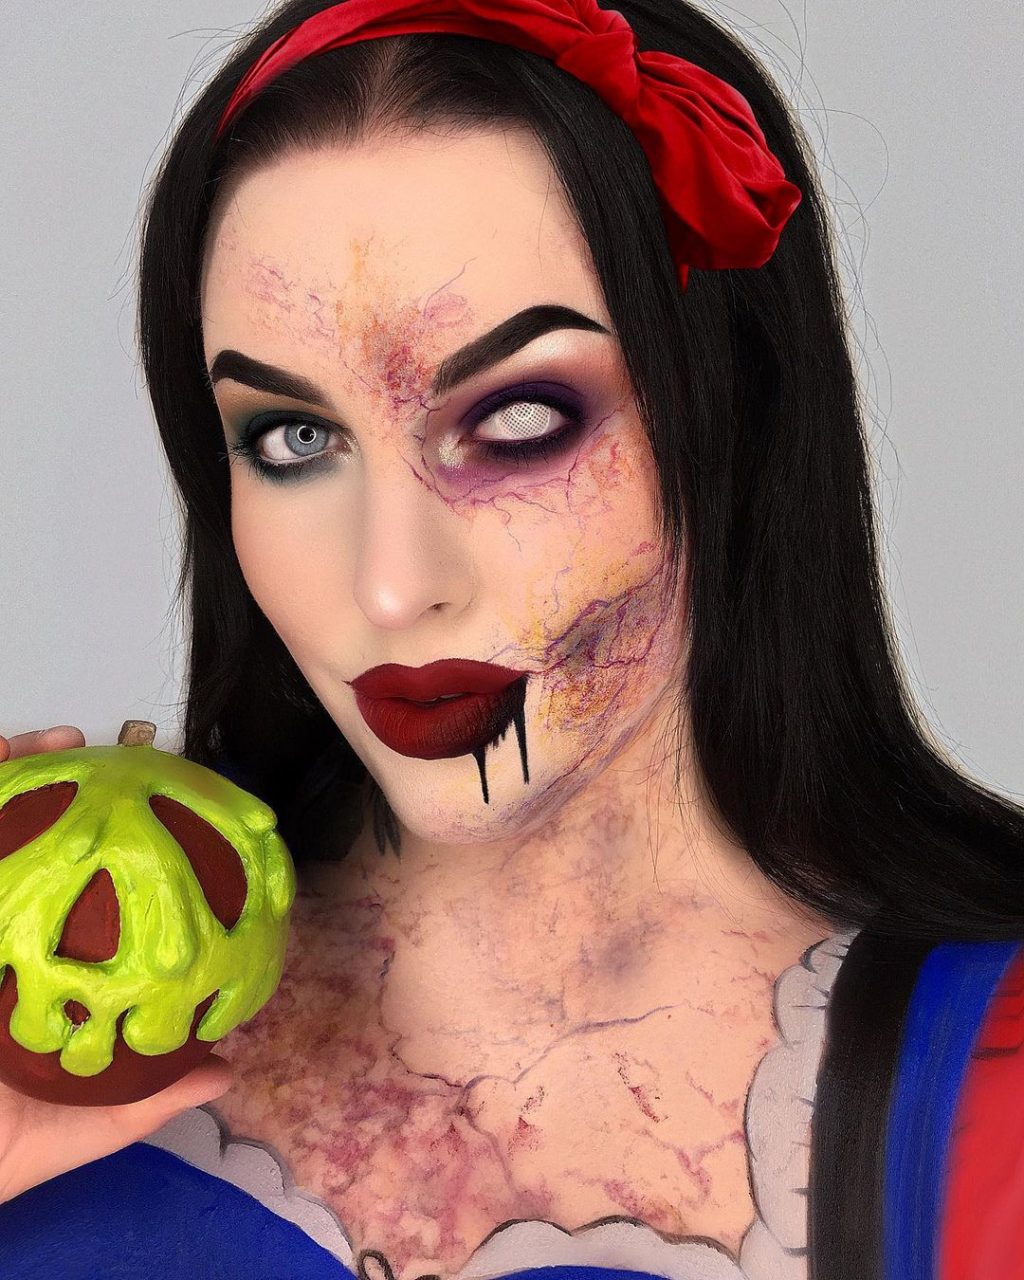 15 Incredible Halloween Makeup Looks